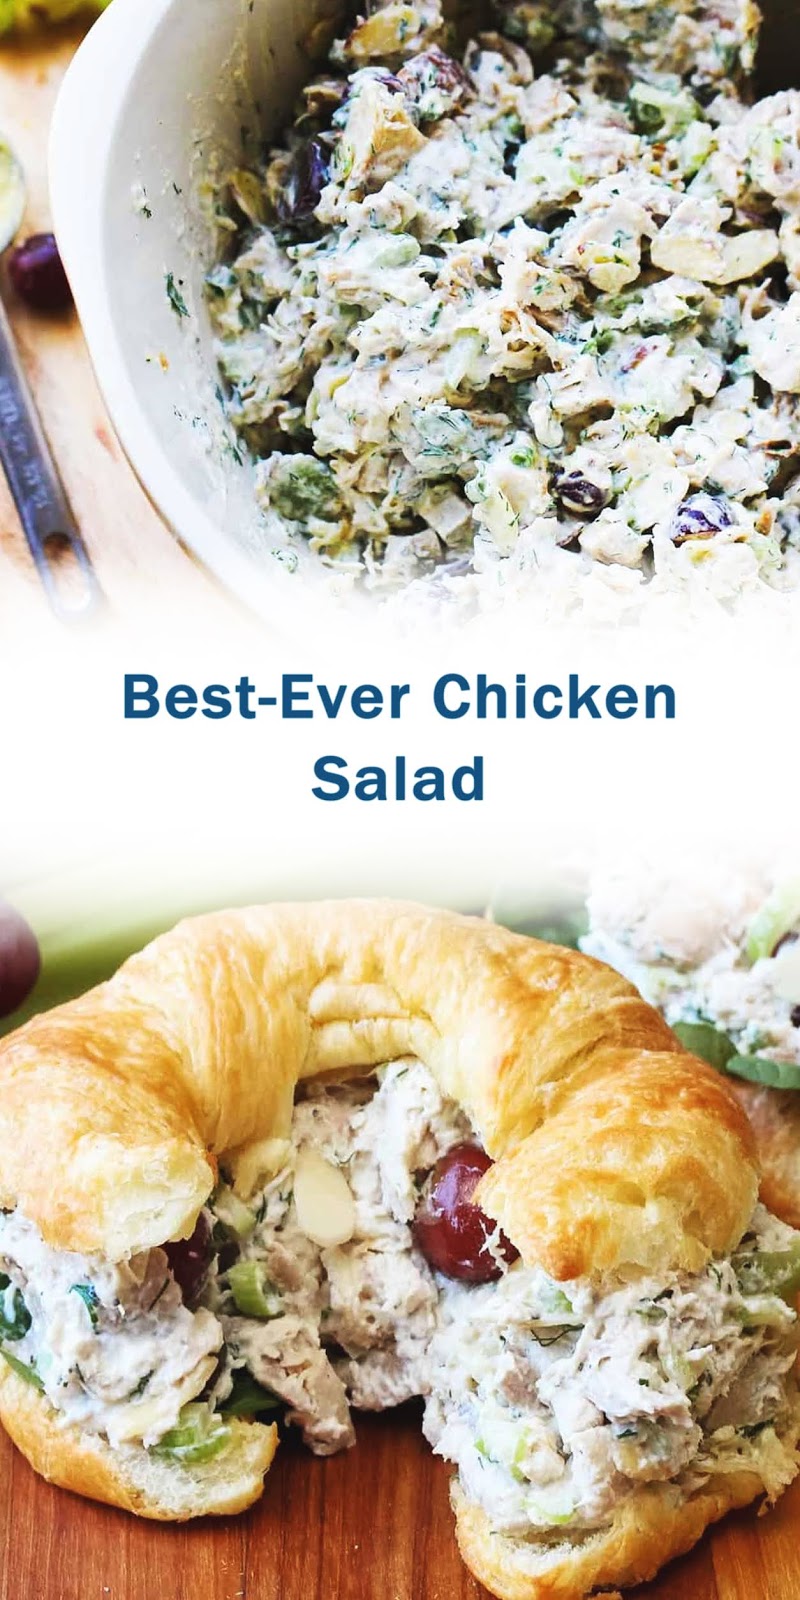 Best-Ever Chicken Salad - 3 SECONDS